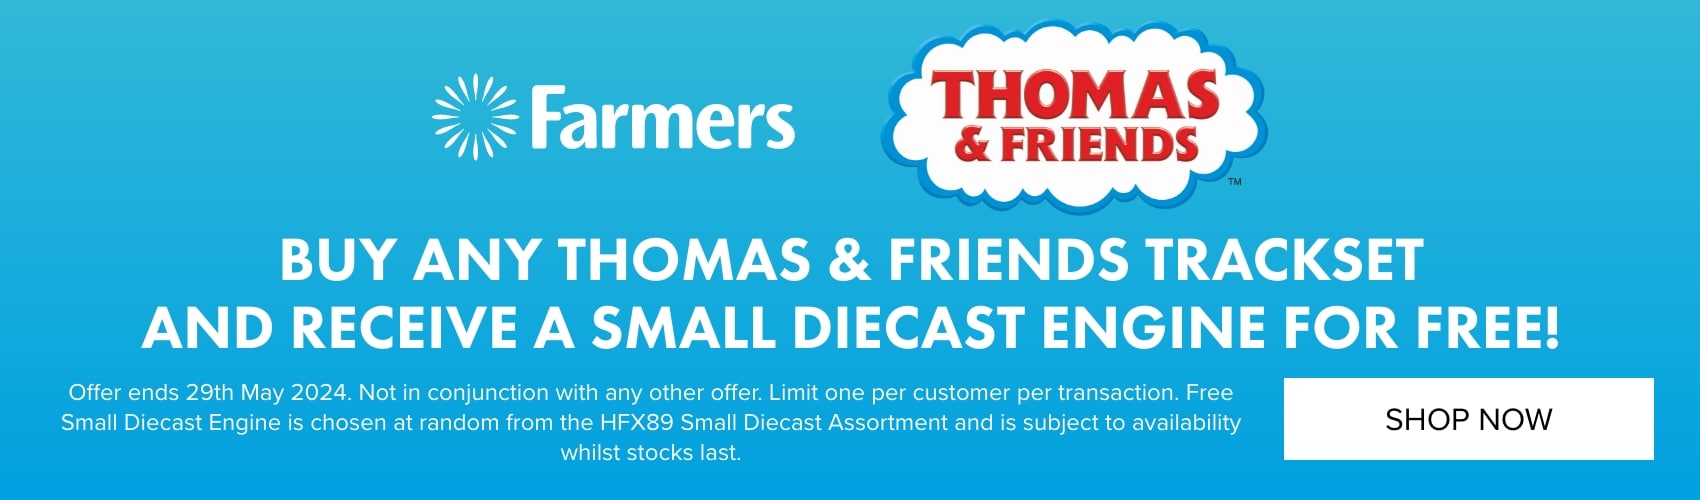 Buy Thomas Trackset, Get Small Engine FREE